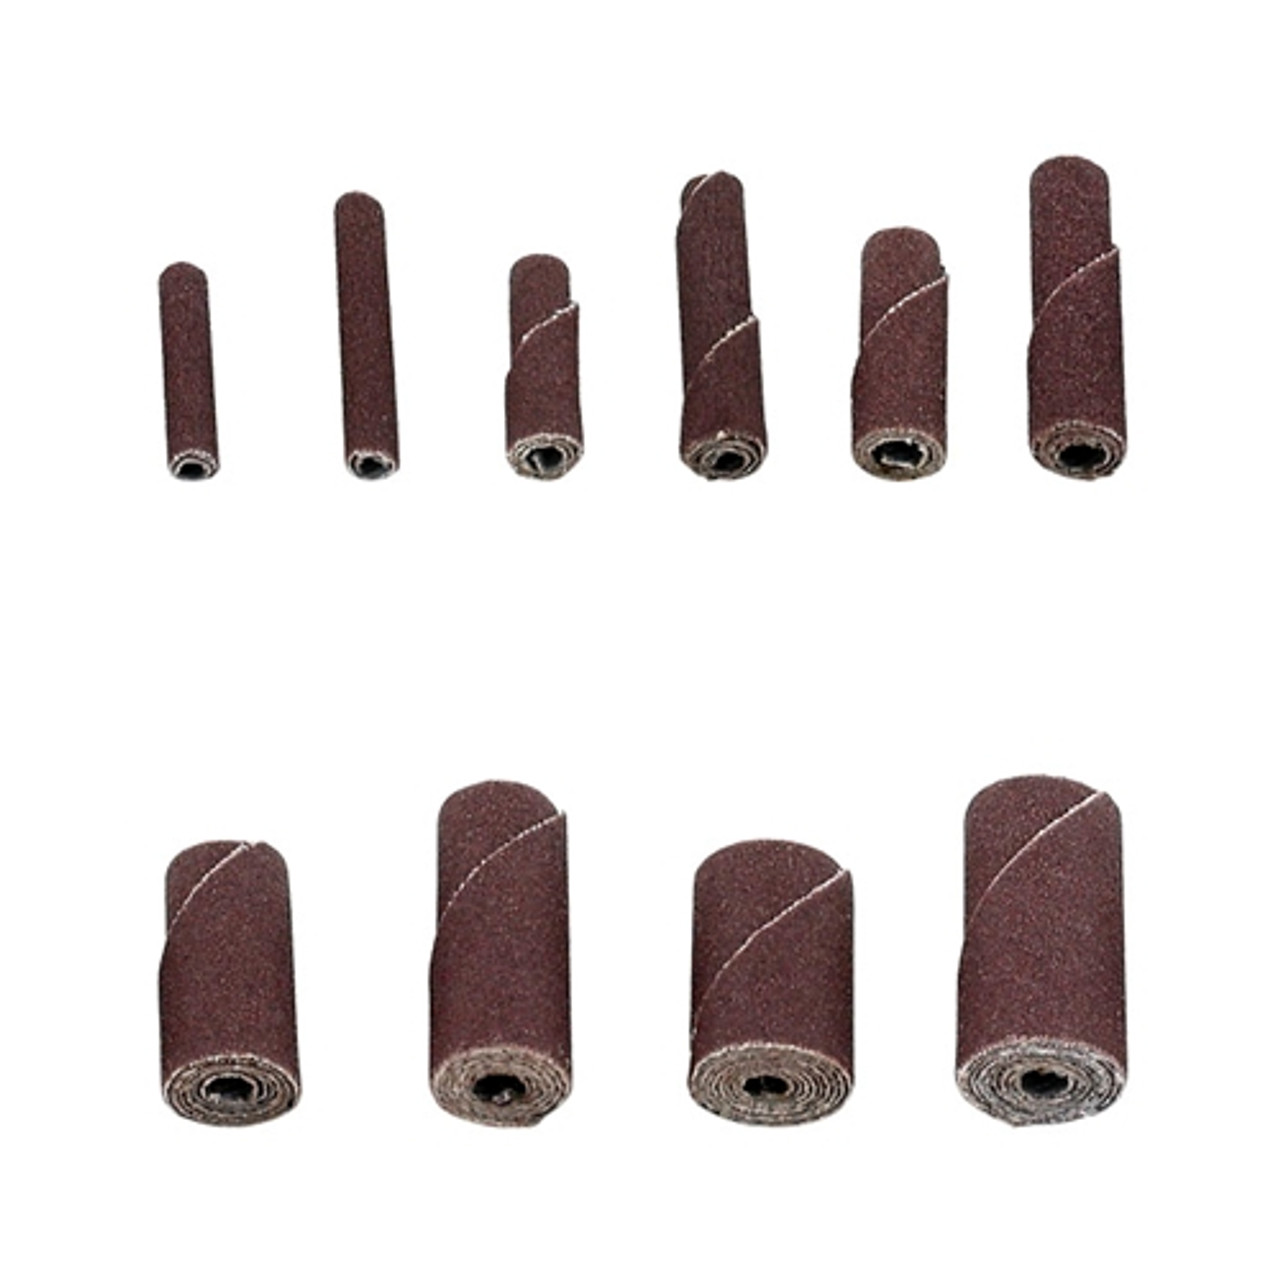 Abrasive Cartridge Rolls - 3/16" x 1" x 3/32", 240 Grit